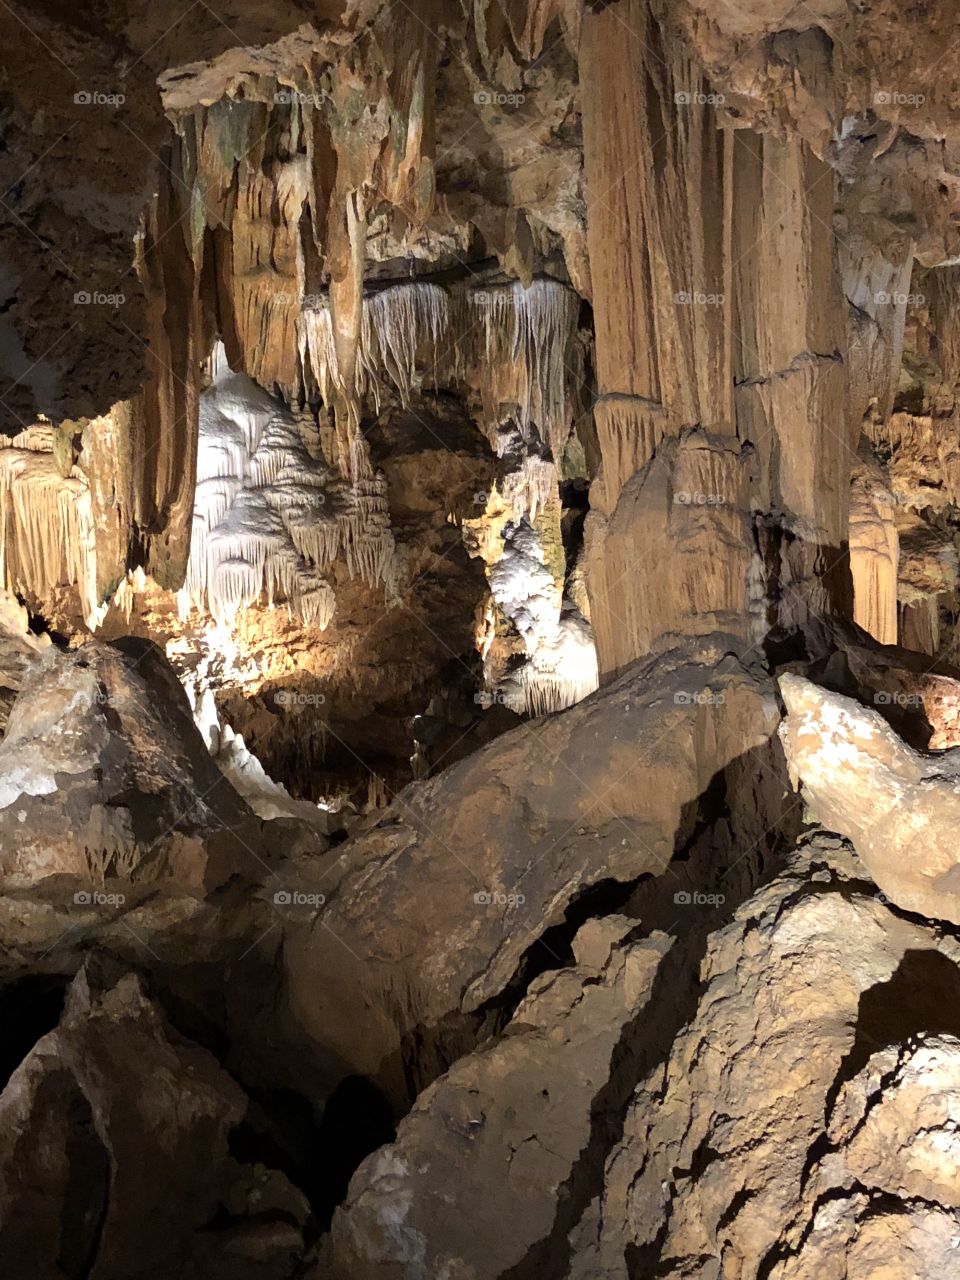 Luray cavern spelunking trip!